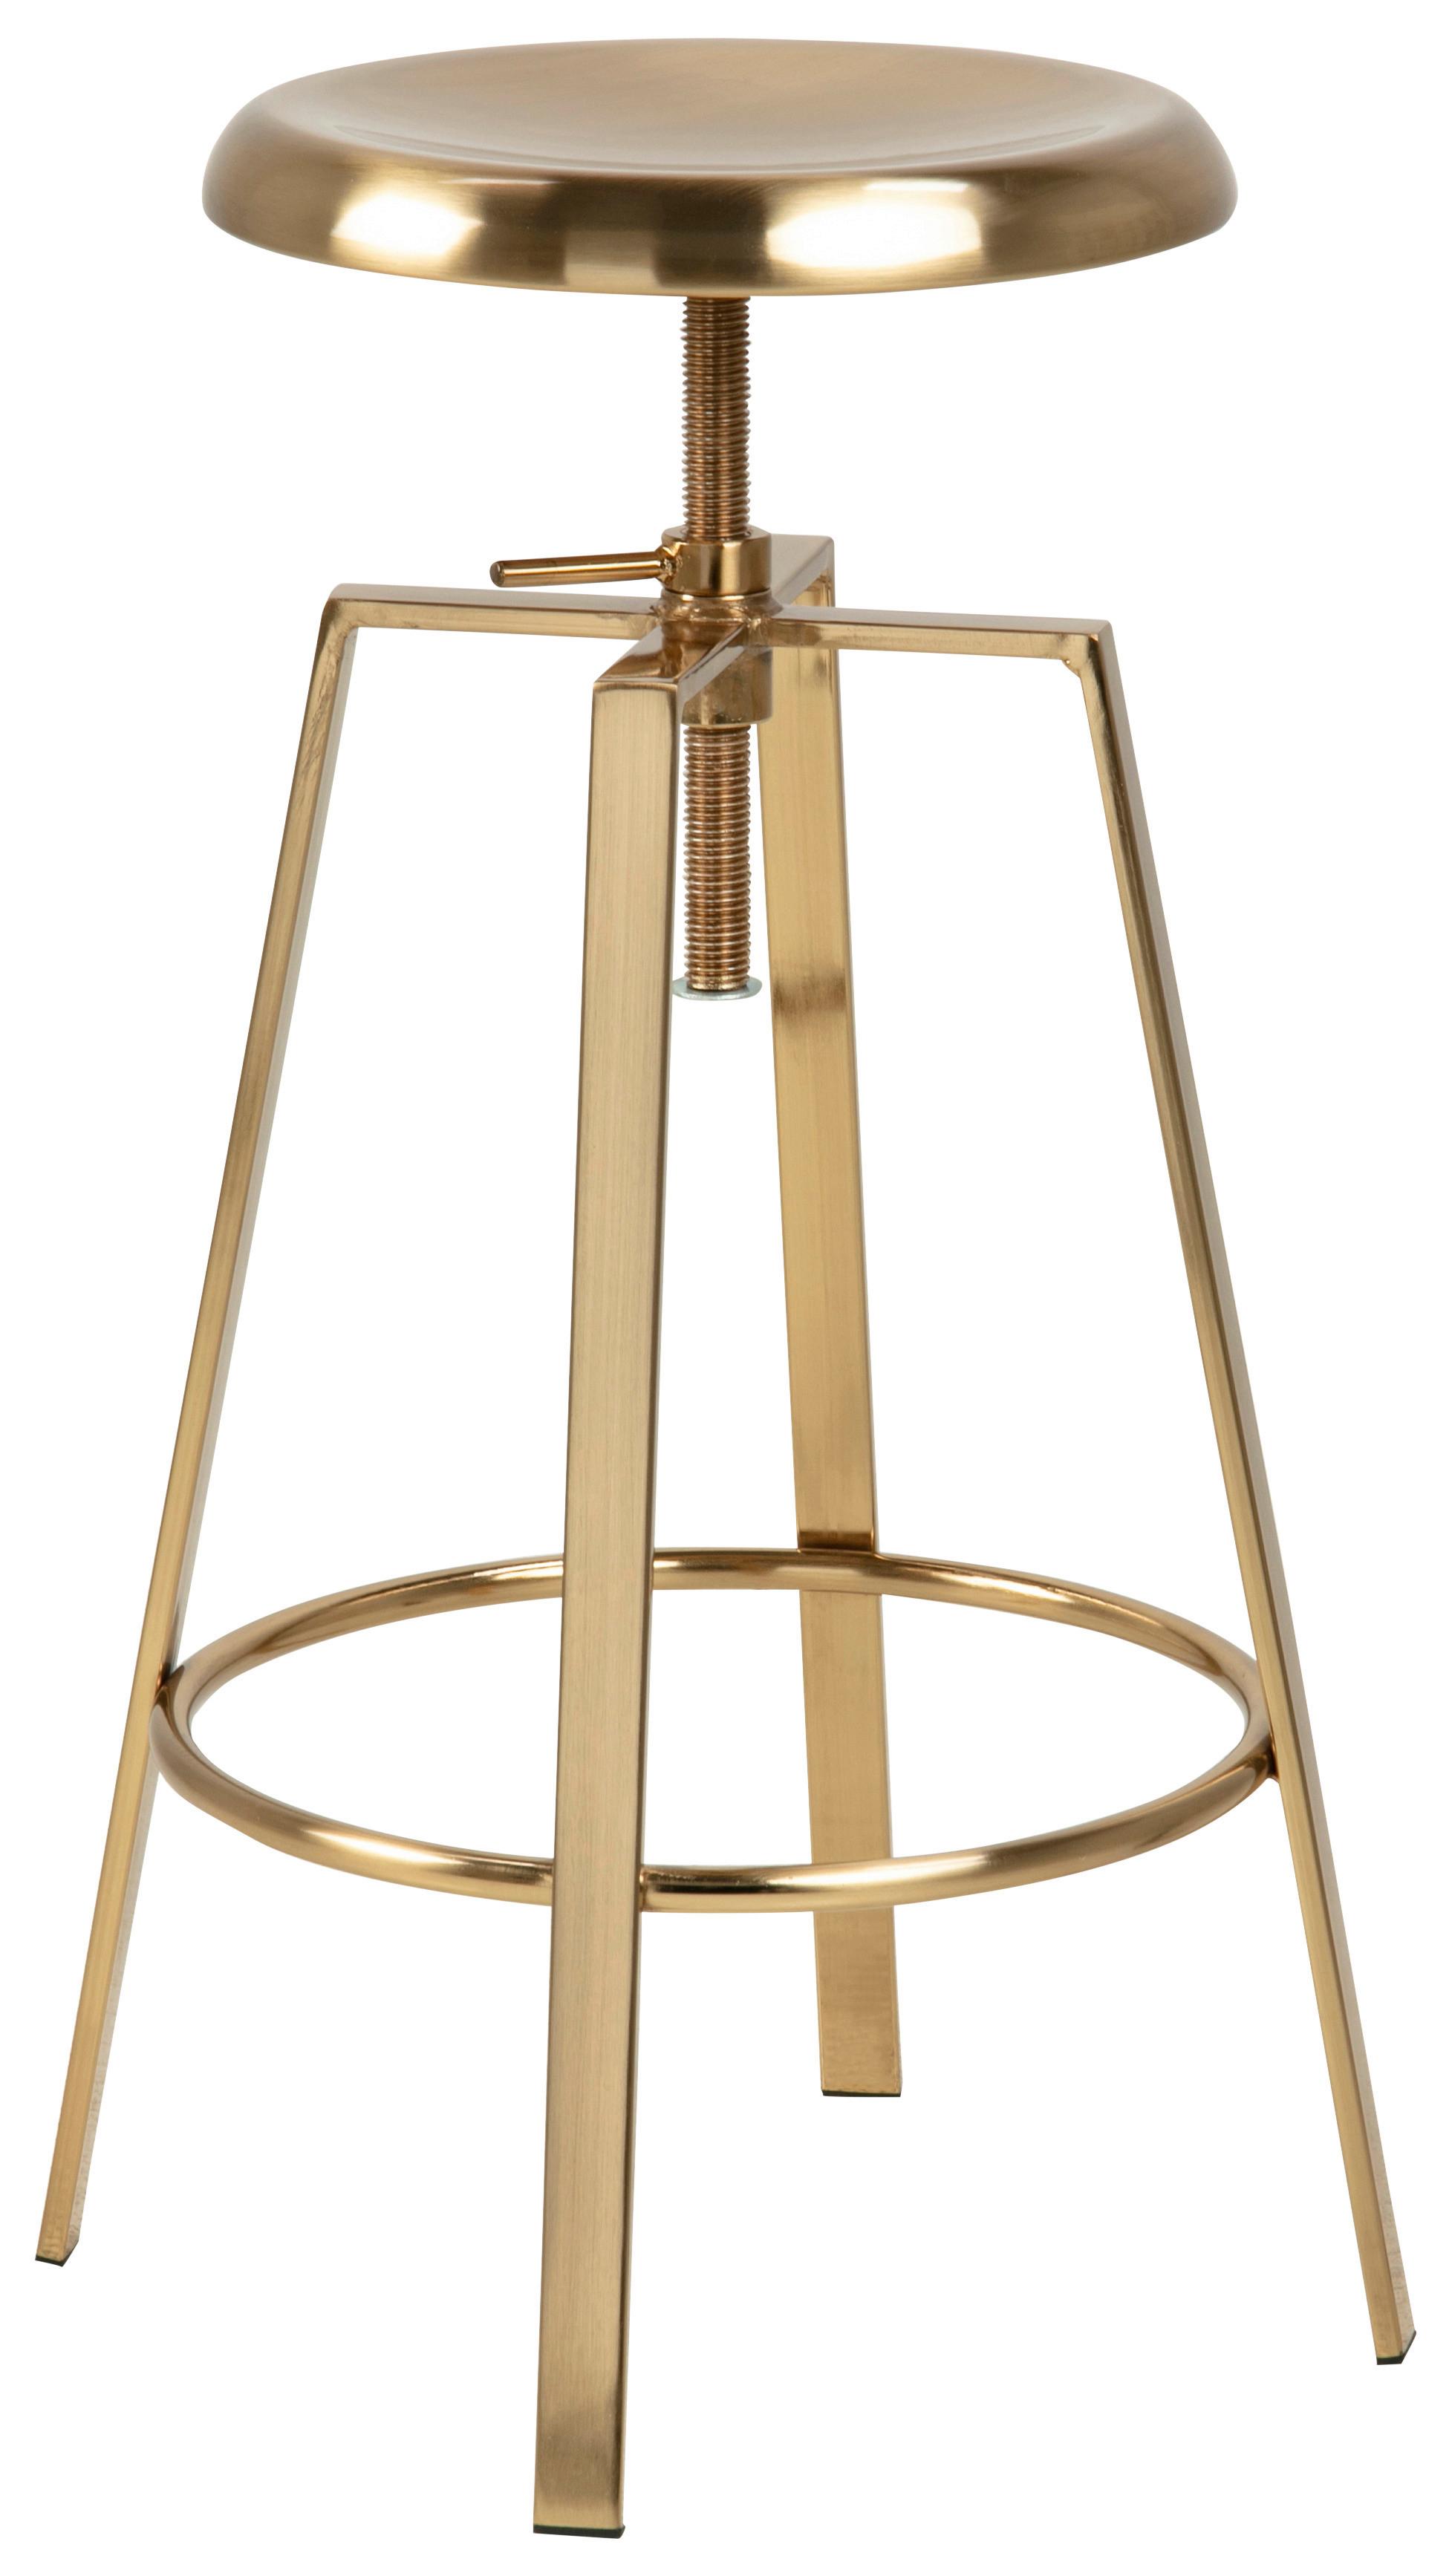 Barová Židle Goose Zlatá - barvy mosazi/barvy zlata, Design, kov (41/87/41cm) - MID.YOU